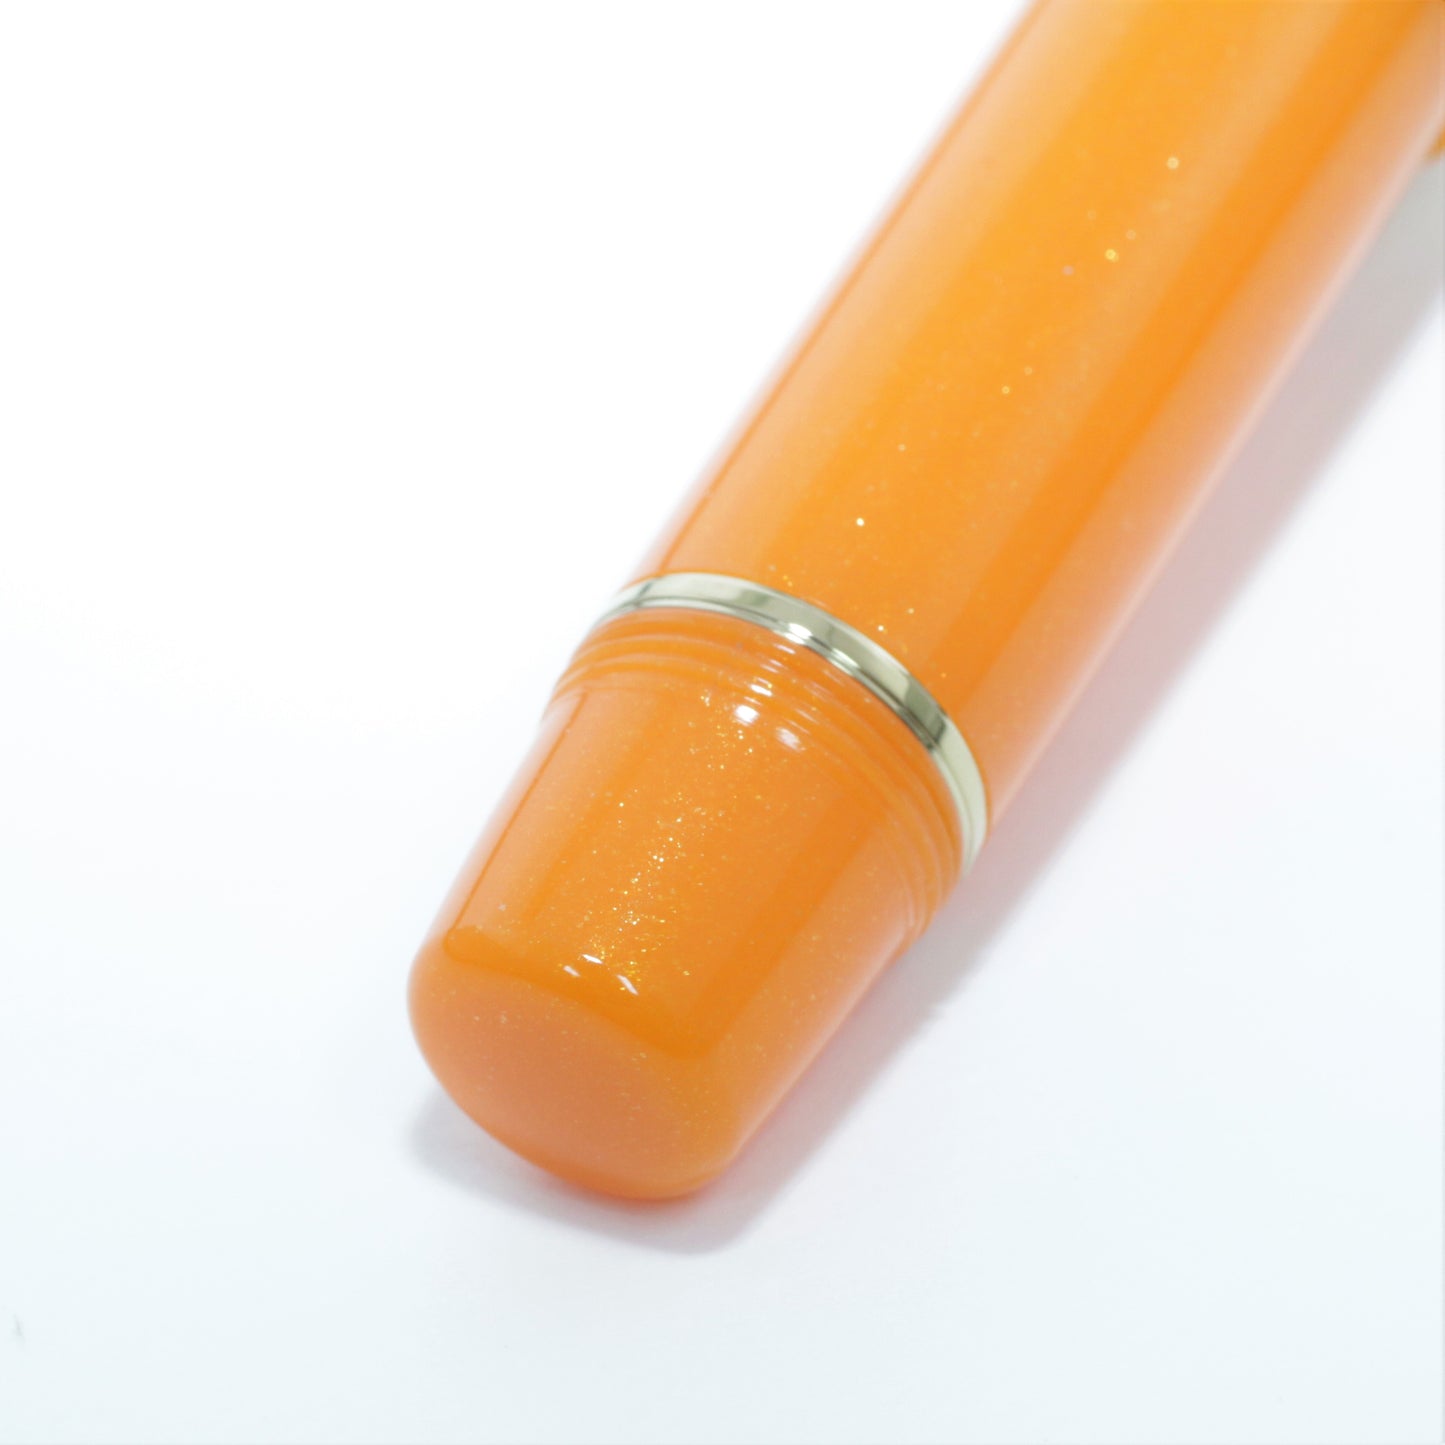 [BUNGUBOX] 10th Anniversary Fountain pen "Mikkabi Mandarin Orange"